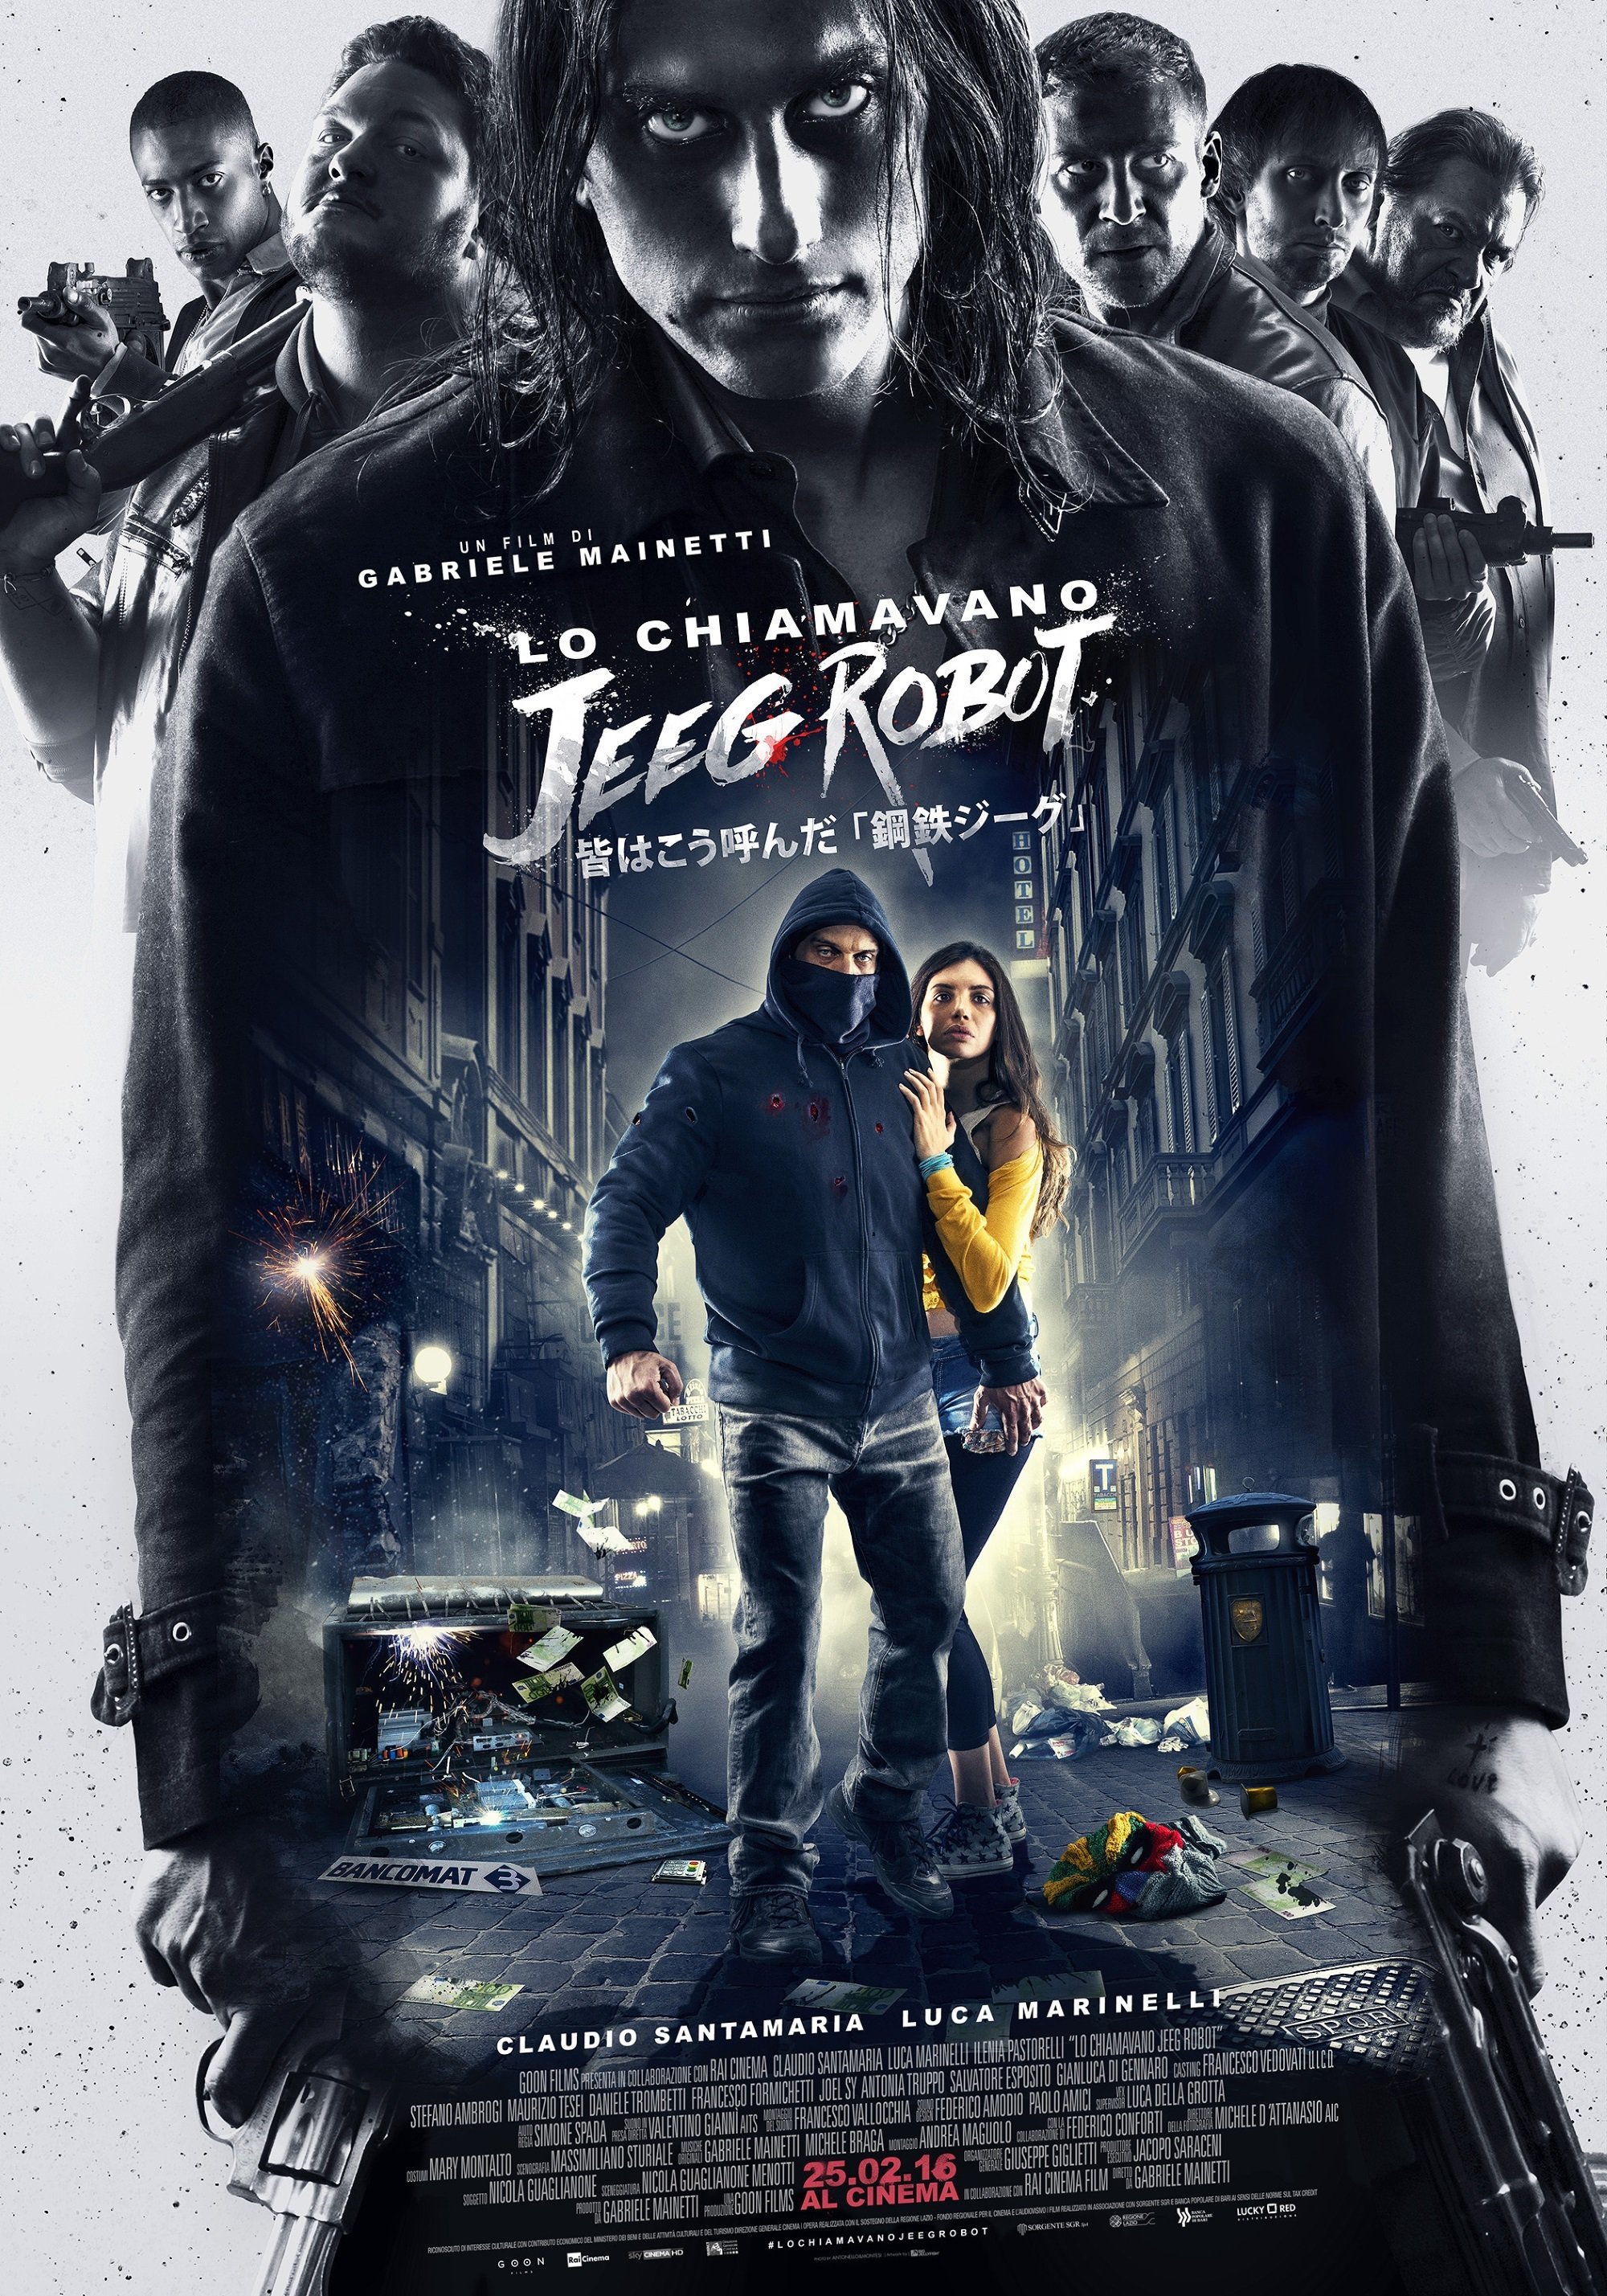 Poster for the movie "Lo chiamavano Jeeg Robot"